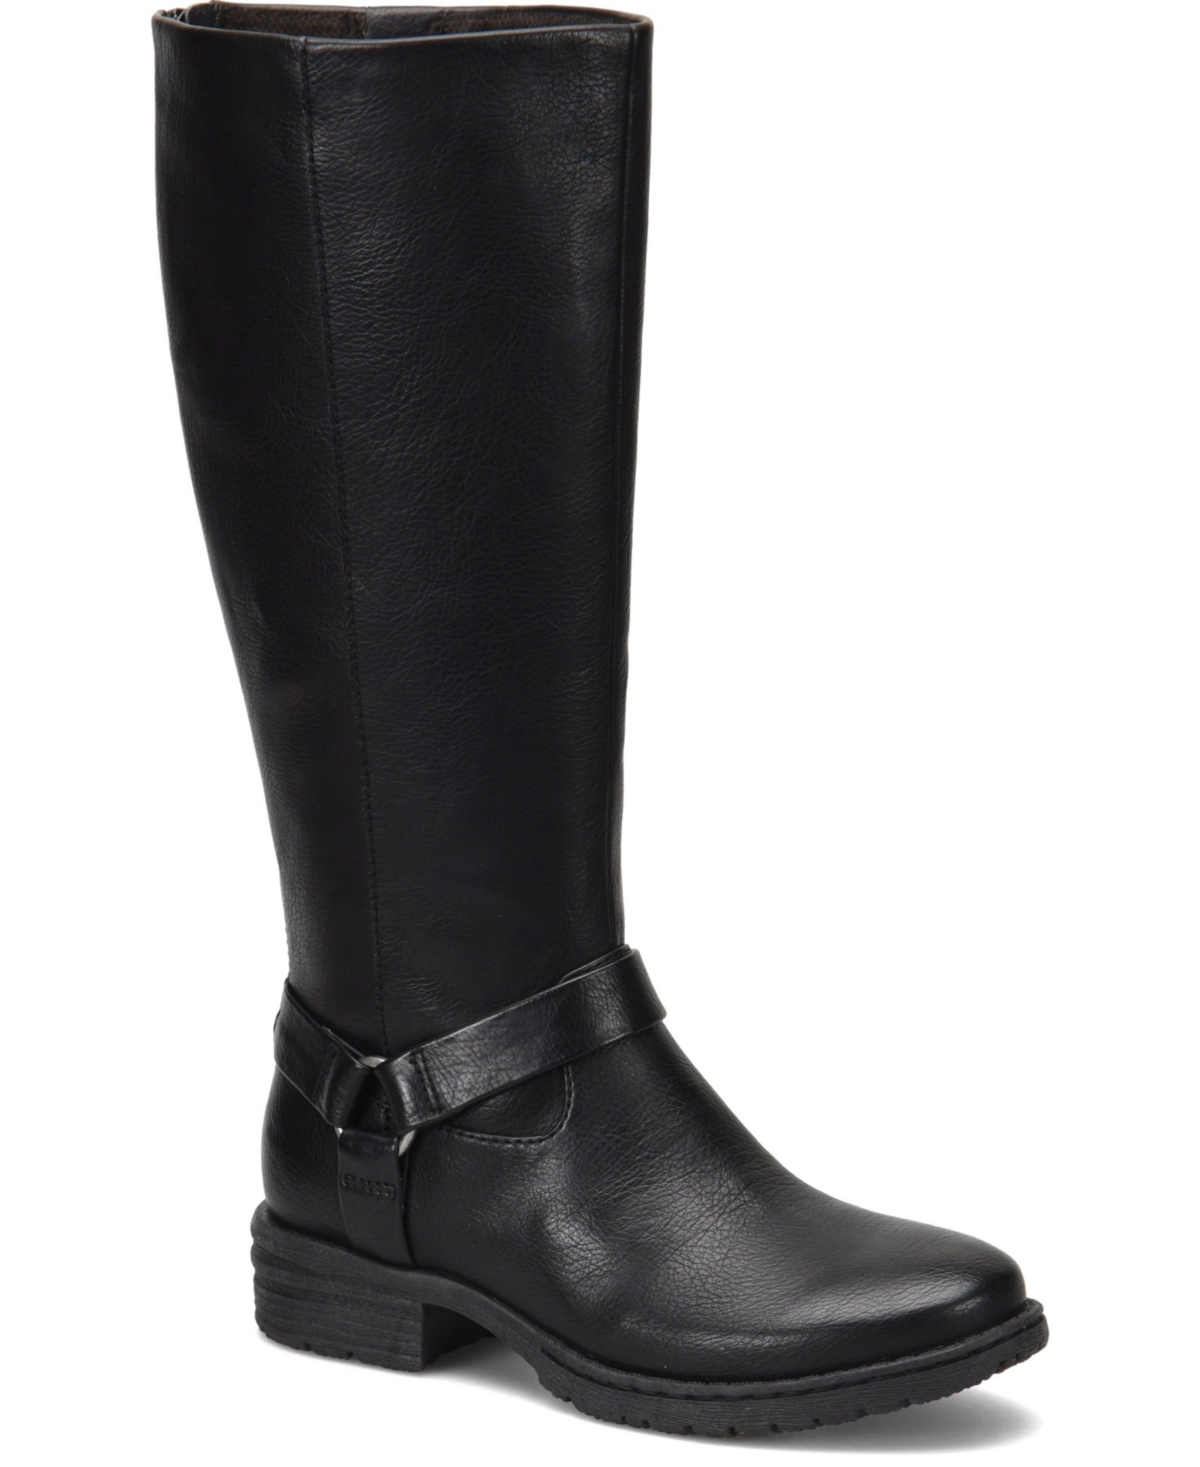 Women's Chesney Inside Zip Tall Comfort Boot - Black